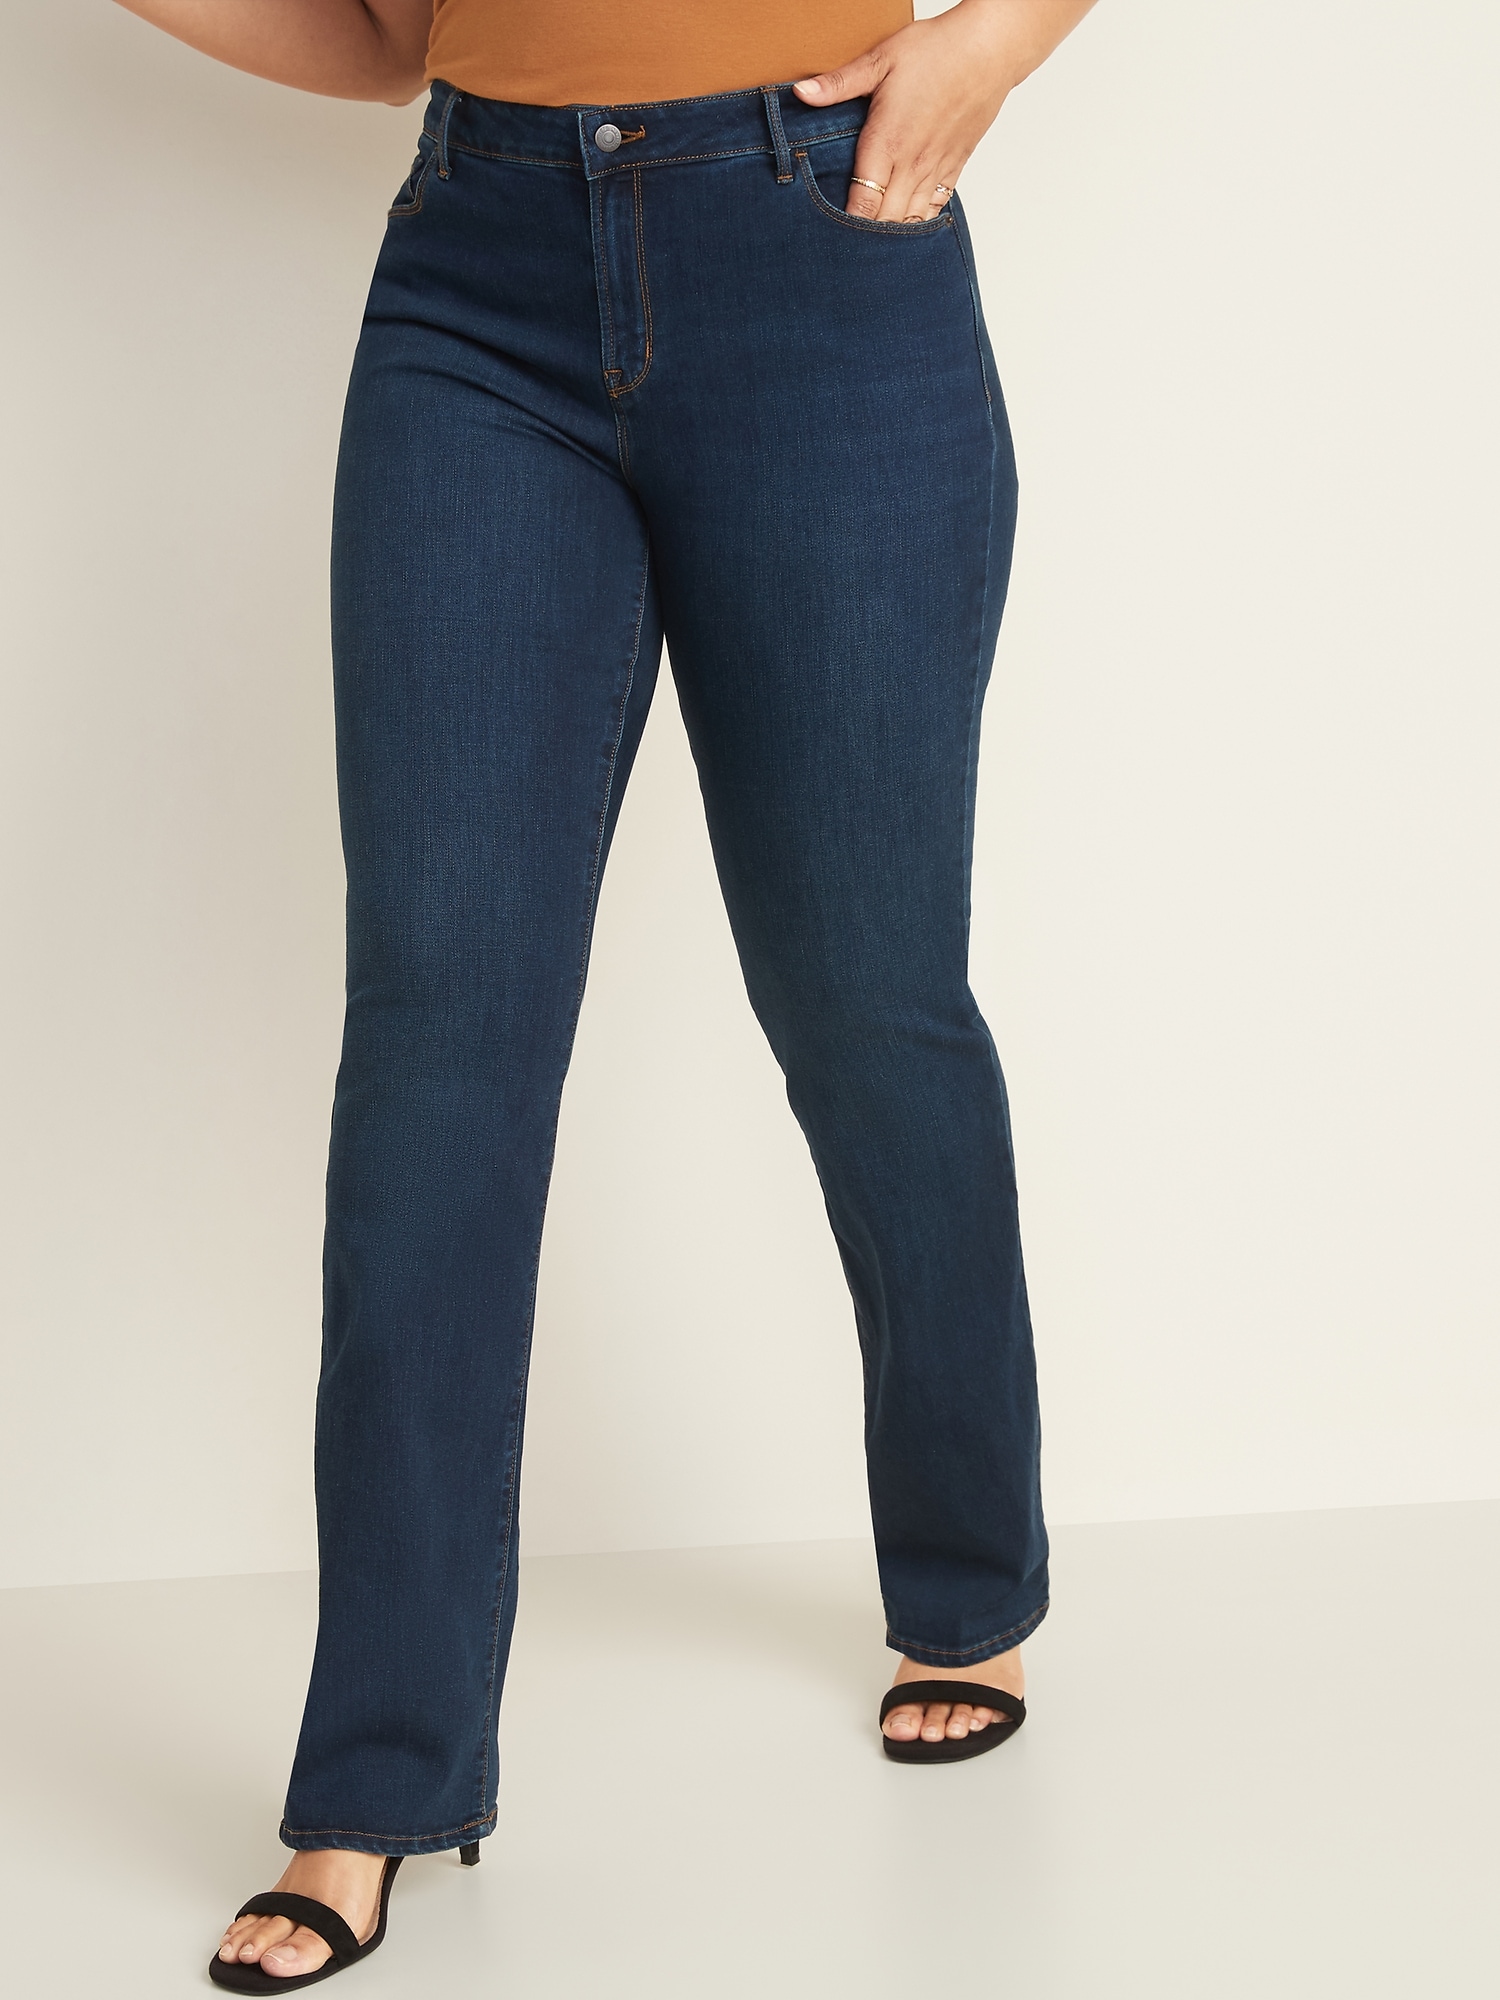 New Womens Blue Boyfit NEXT Crop Jeans Size 18 16 14 12 10 8 Long Reg Petite £32 